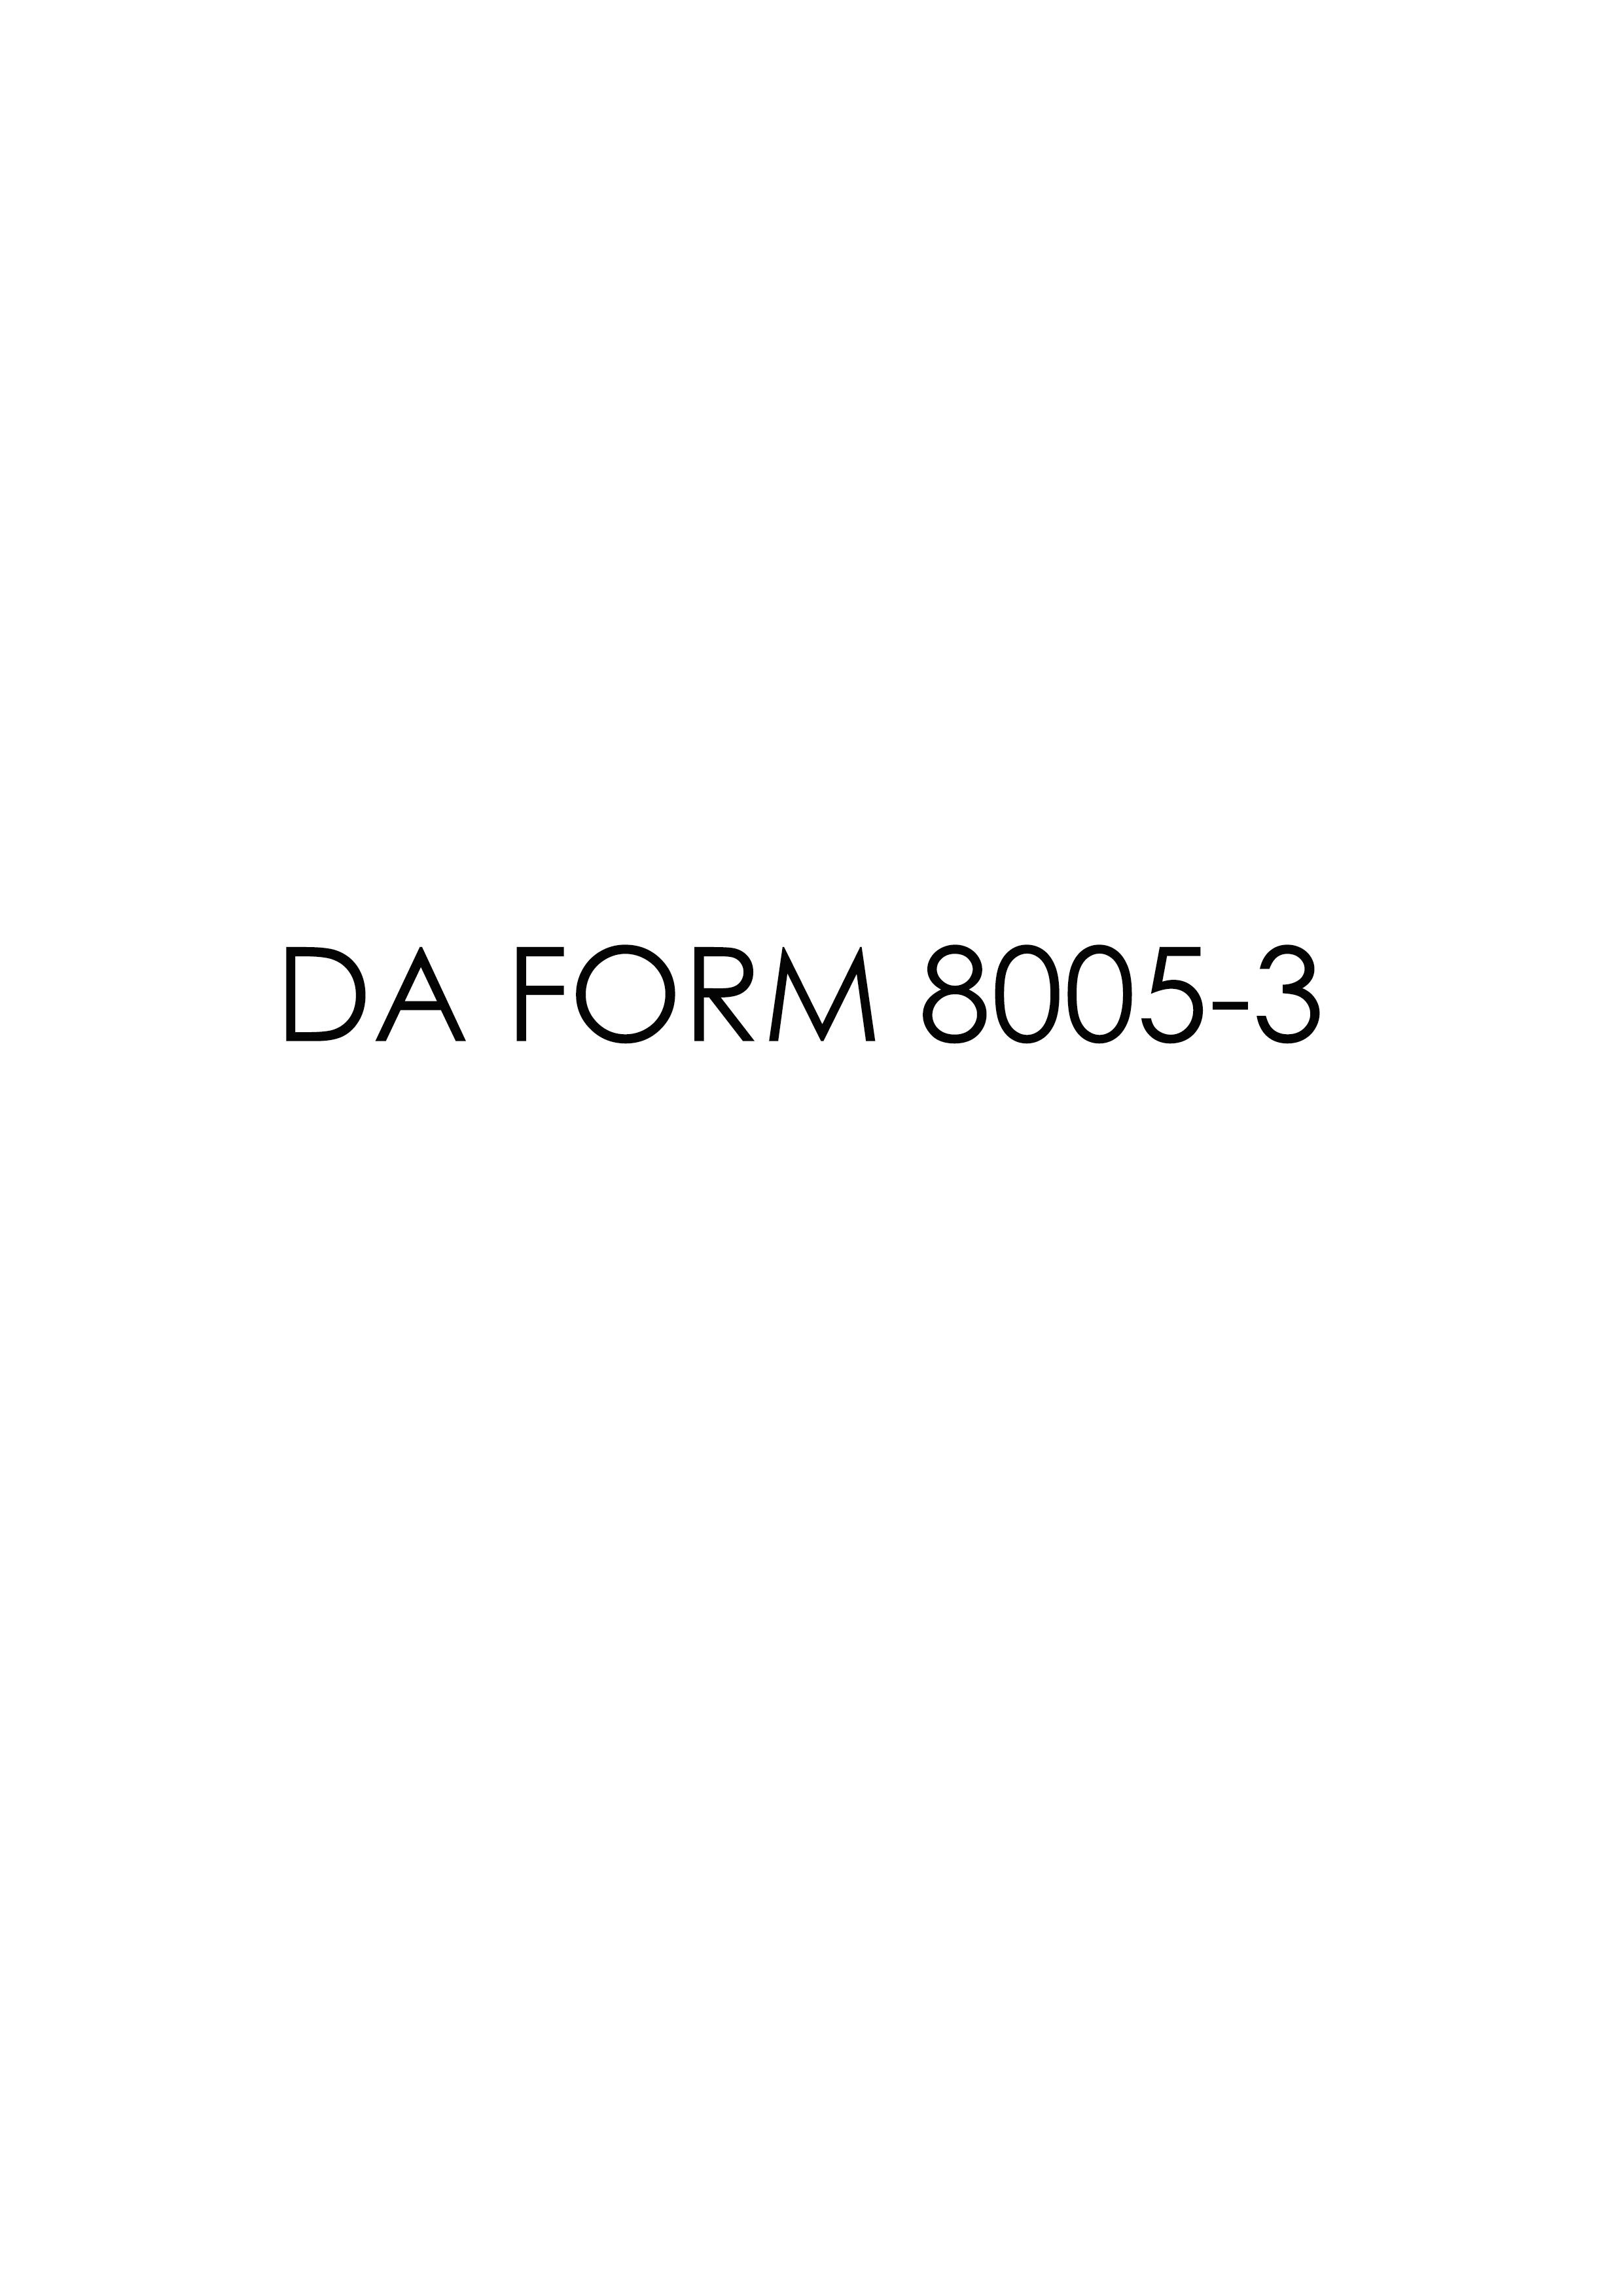 Download da 8005-3 Form